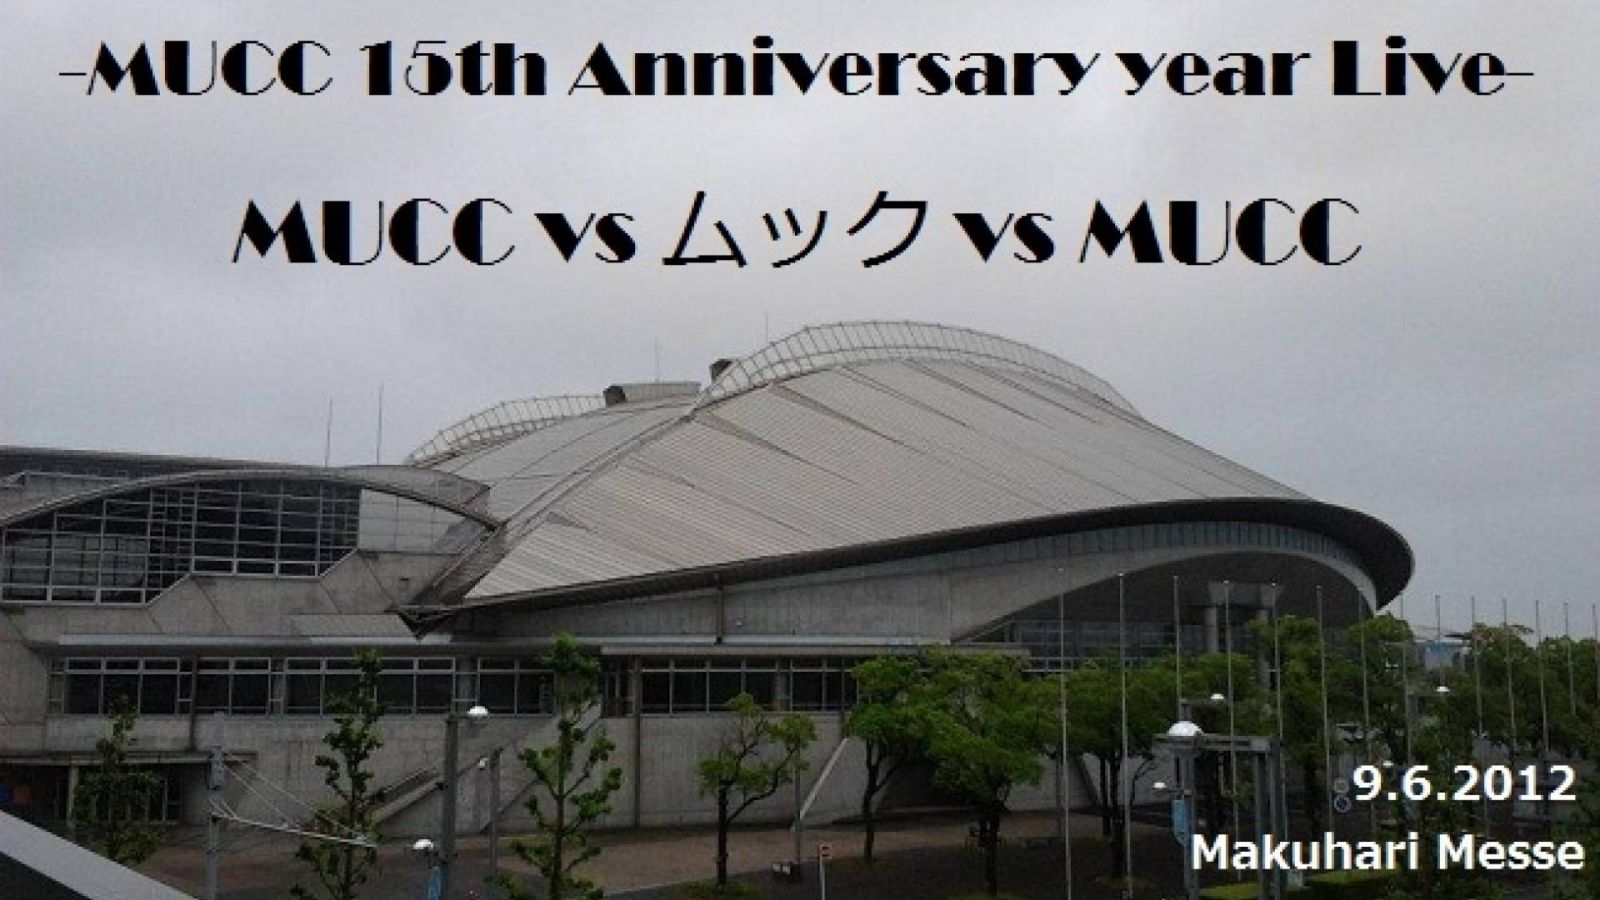 MUCC 15th Anniversary year Live ”MUCC vs MUCC vs MUCC” © JaME